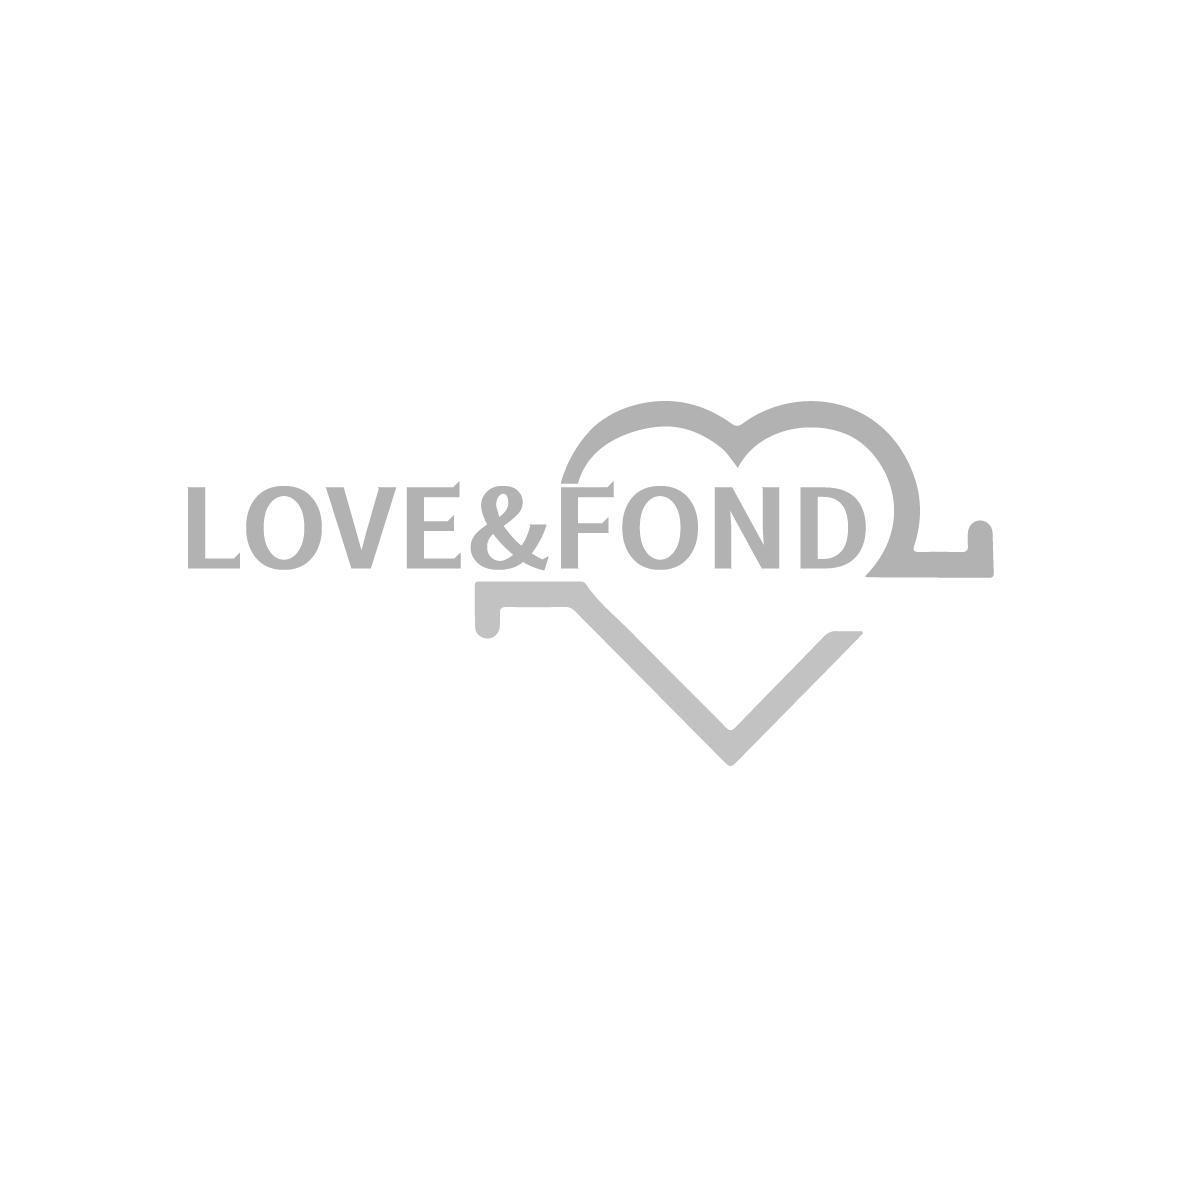 LOVE&FOND